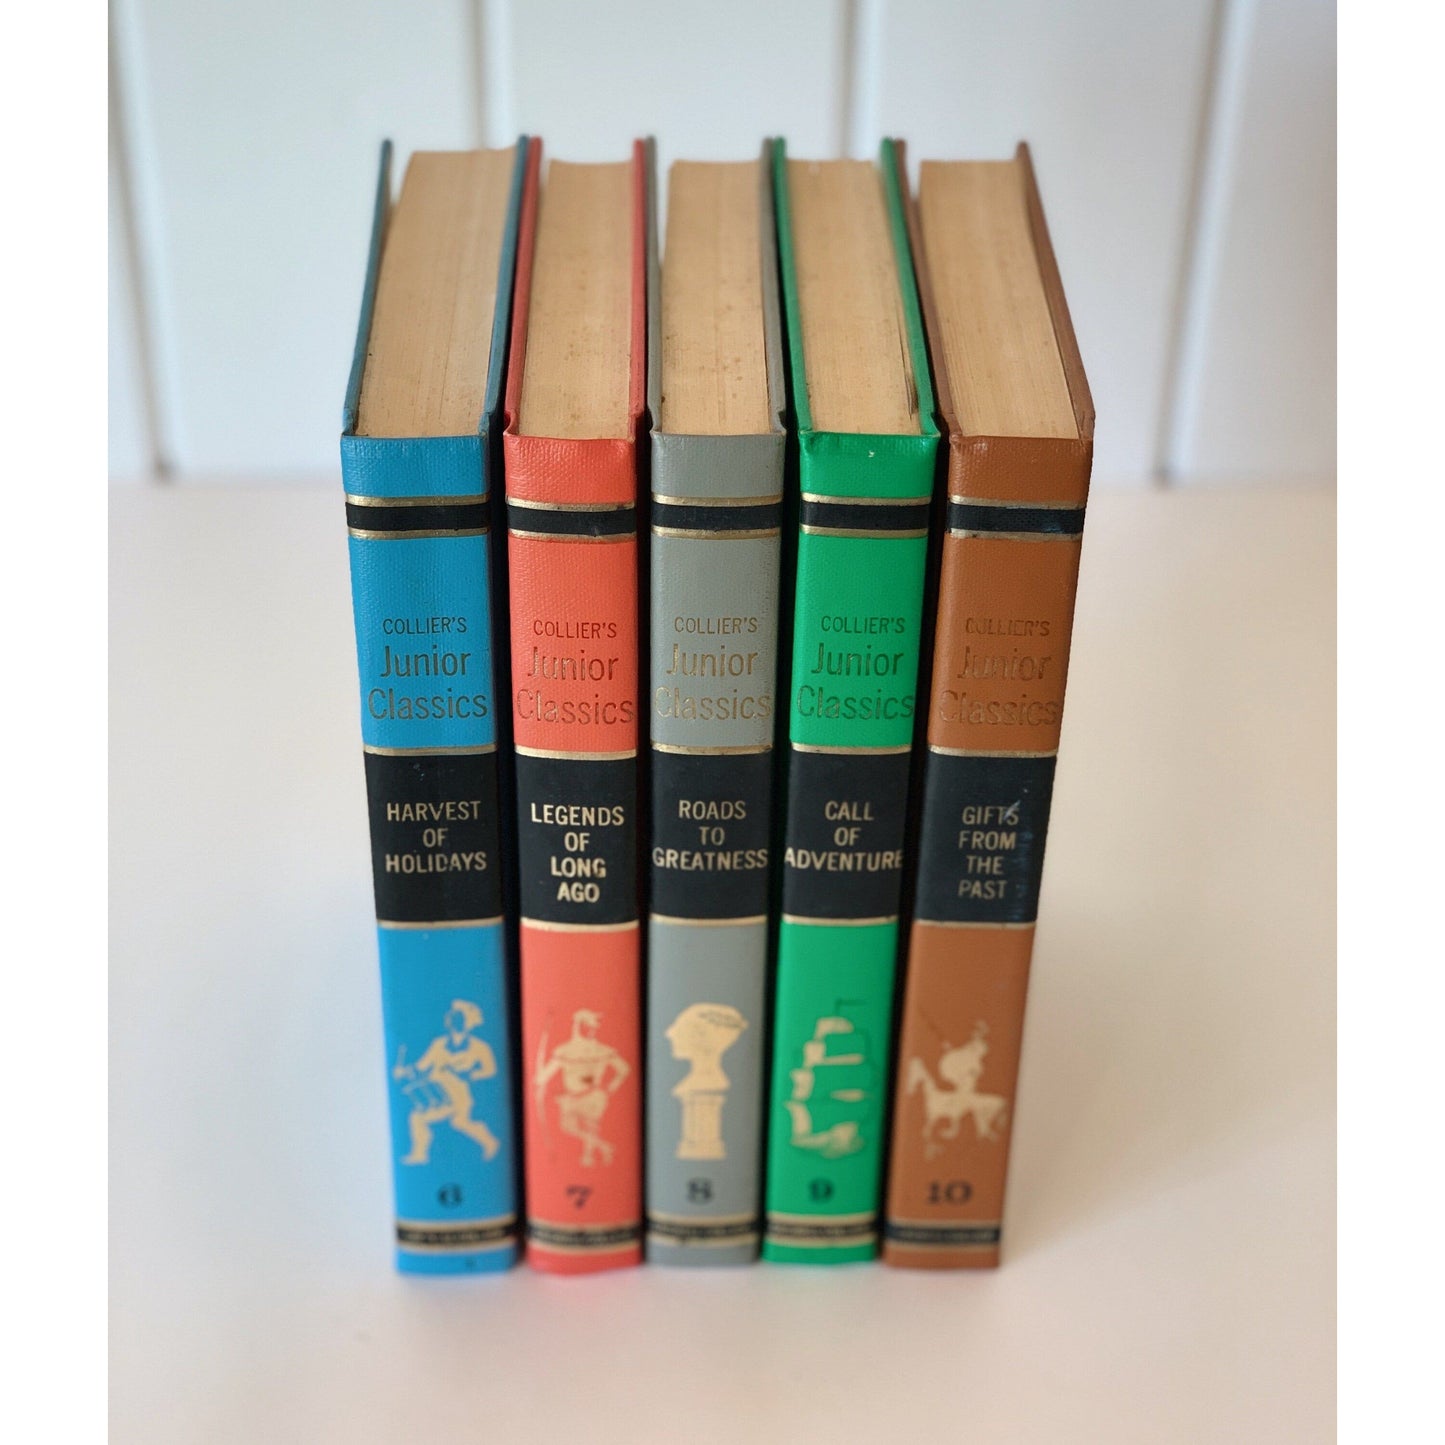 Collier's Junior Classics Partial Set, Vintage 1962 Colorful Book Set for Decor, Playroom Decor, Mid-Century Decor